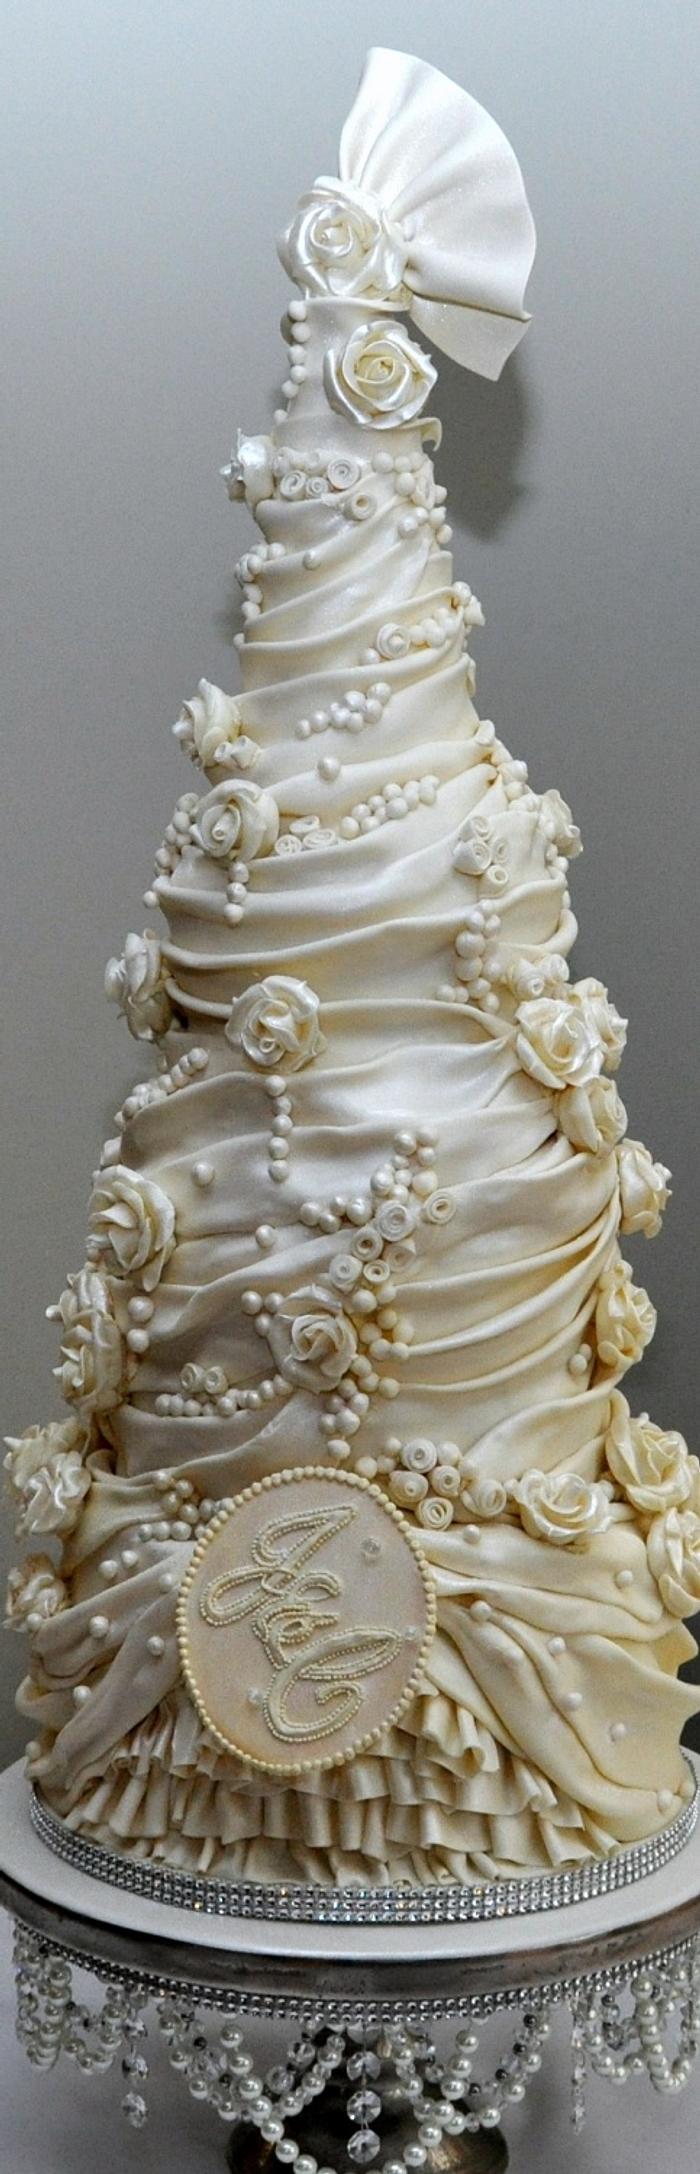 Wrap wedding cake